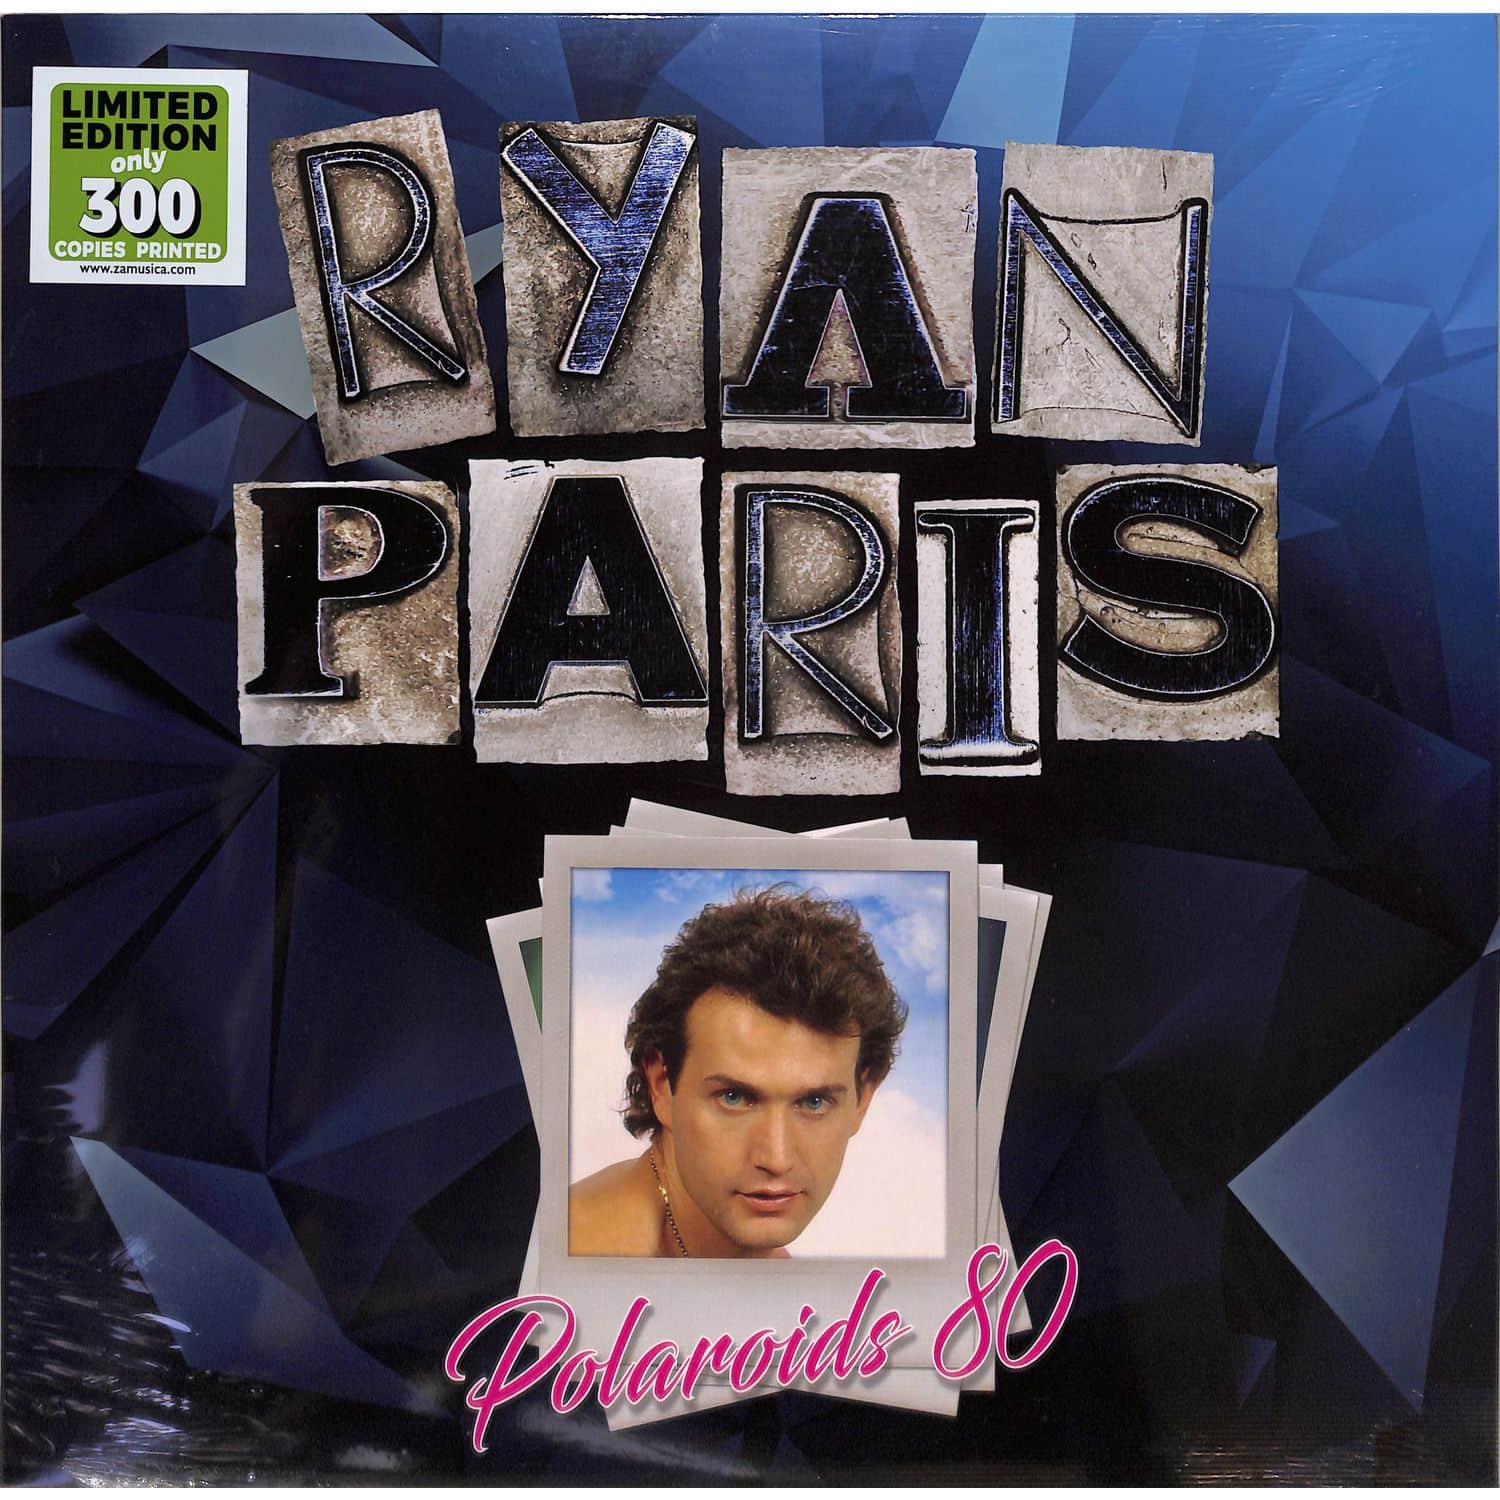 Ryan Paris - POLAROIDS 80